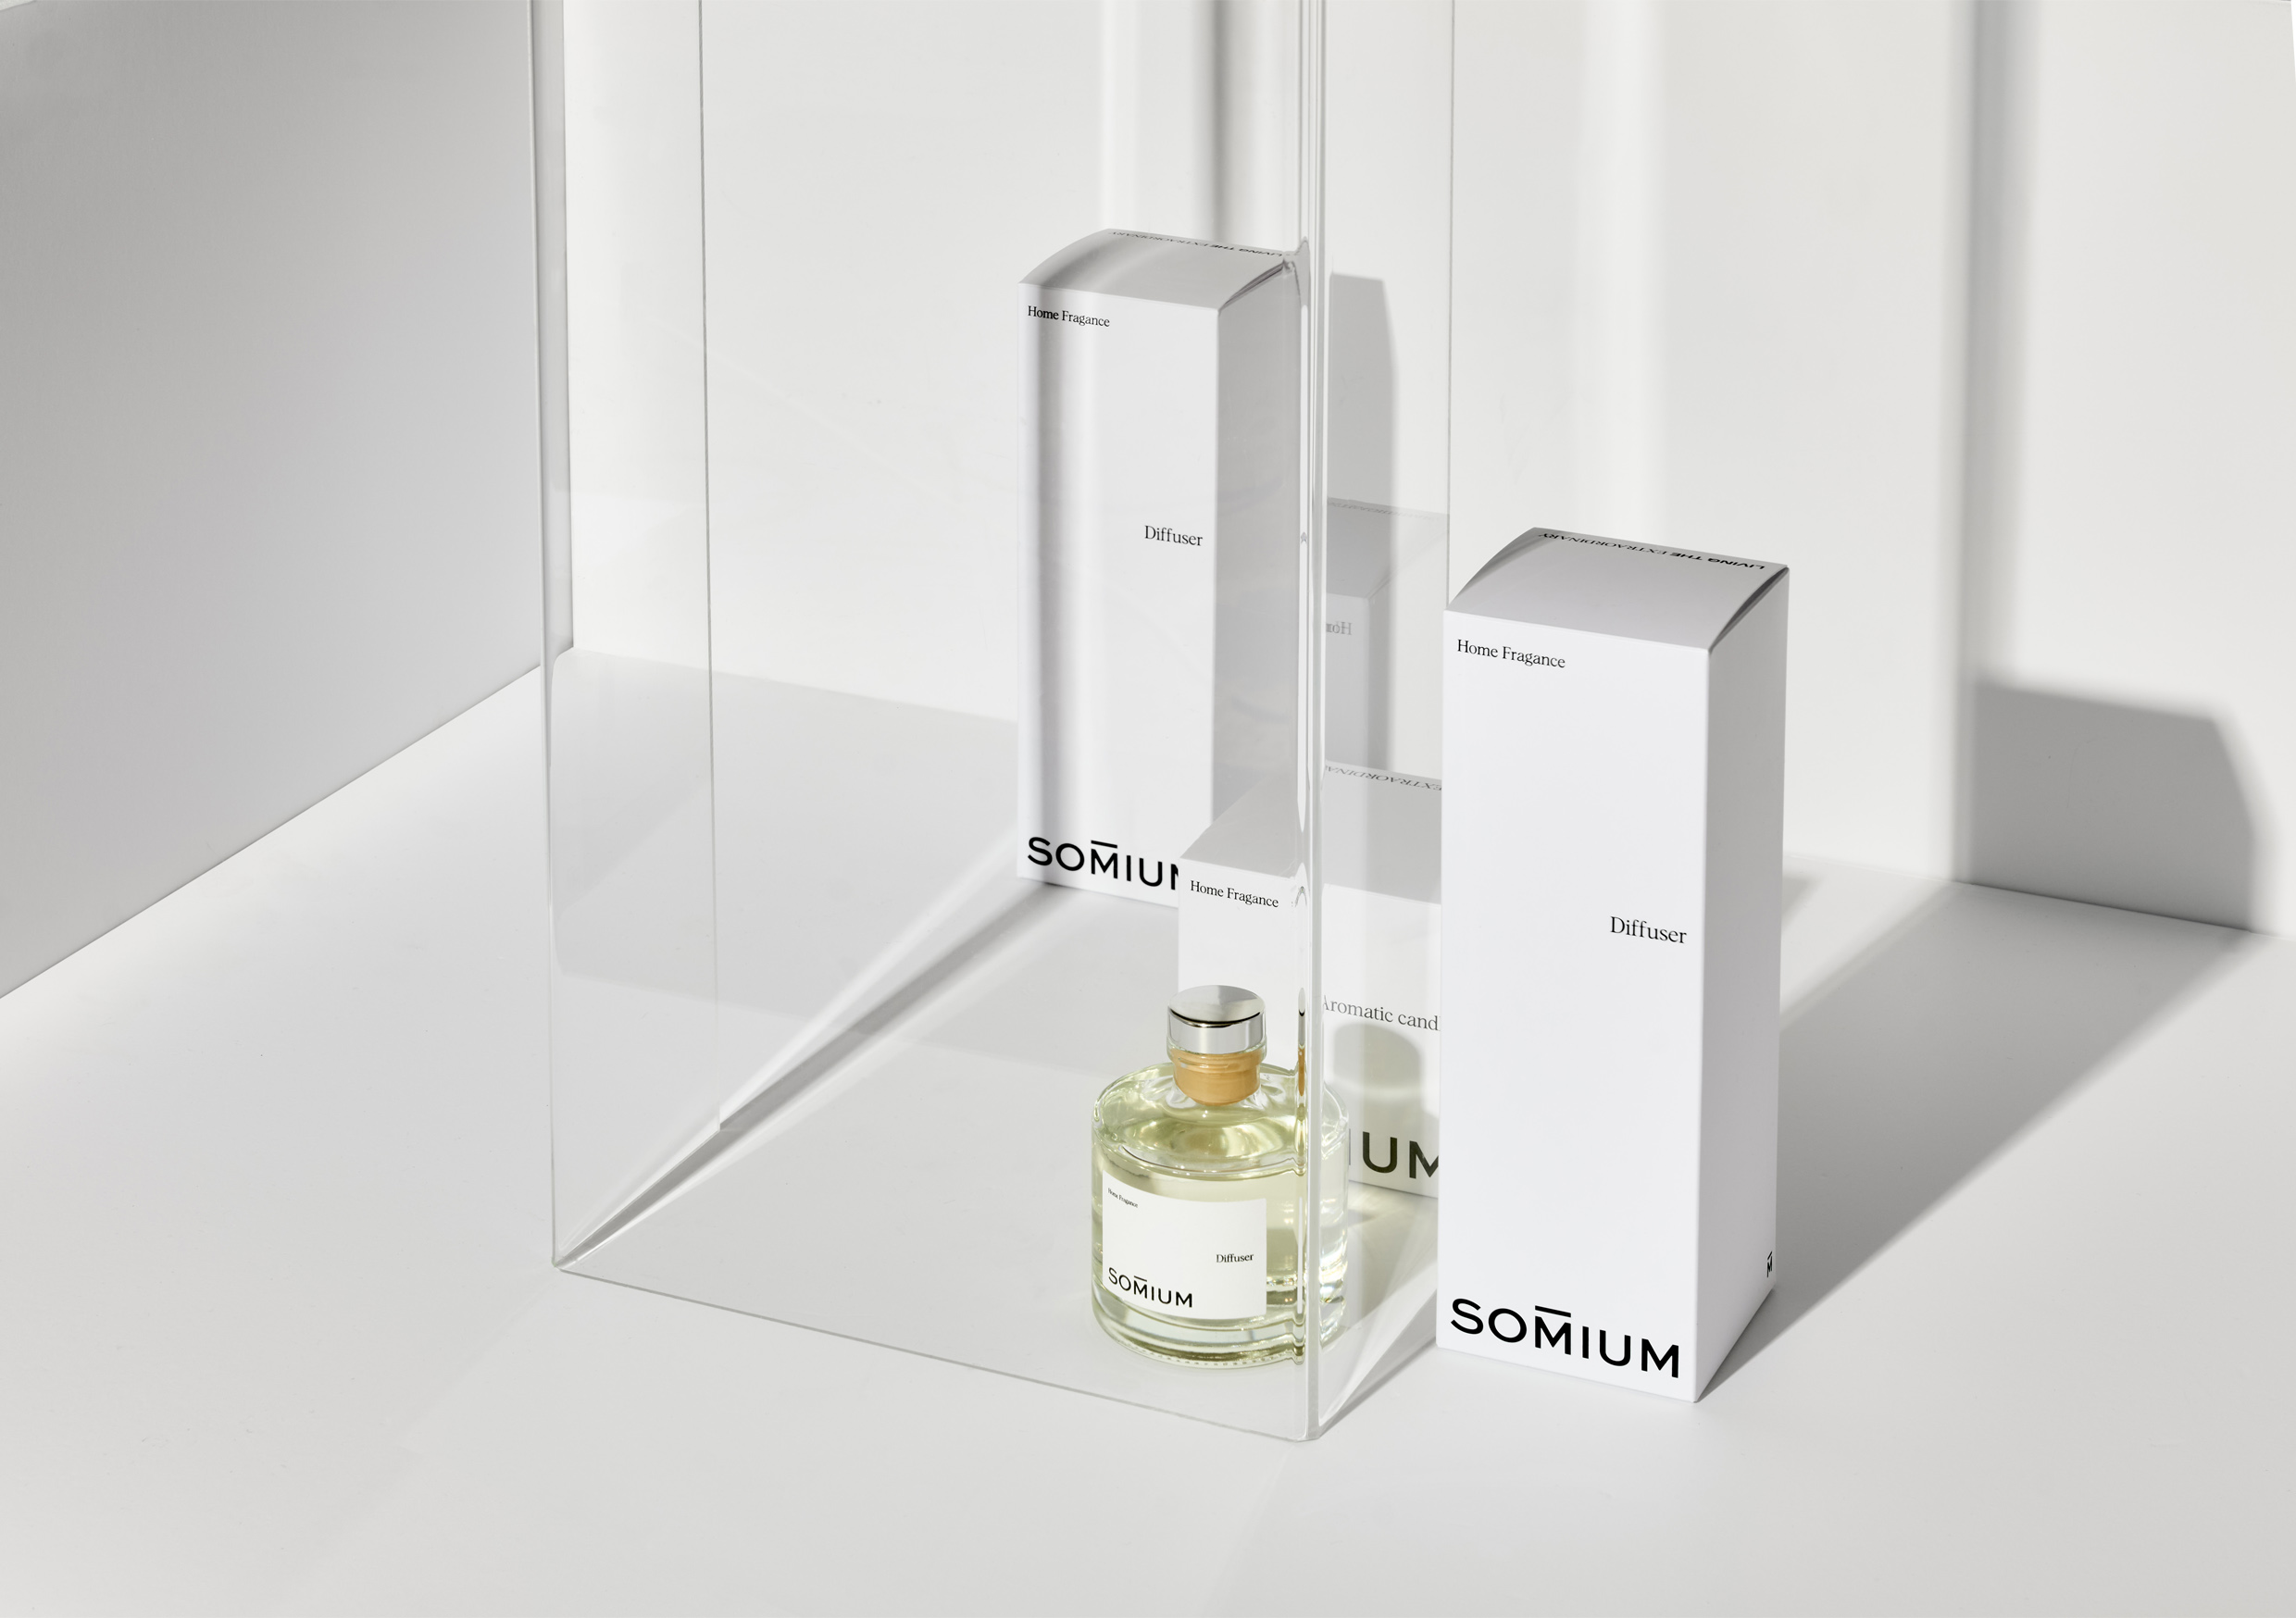 diseno-packaging-grafico-fragance-perfume-somium-evangelisti-9.jpg